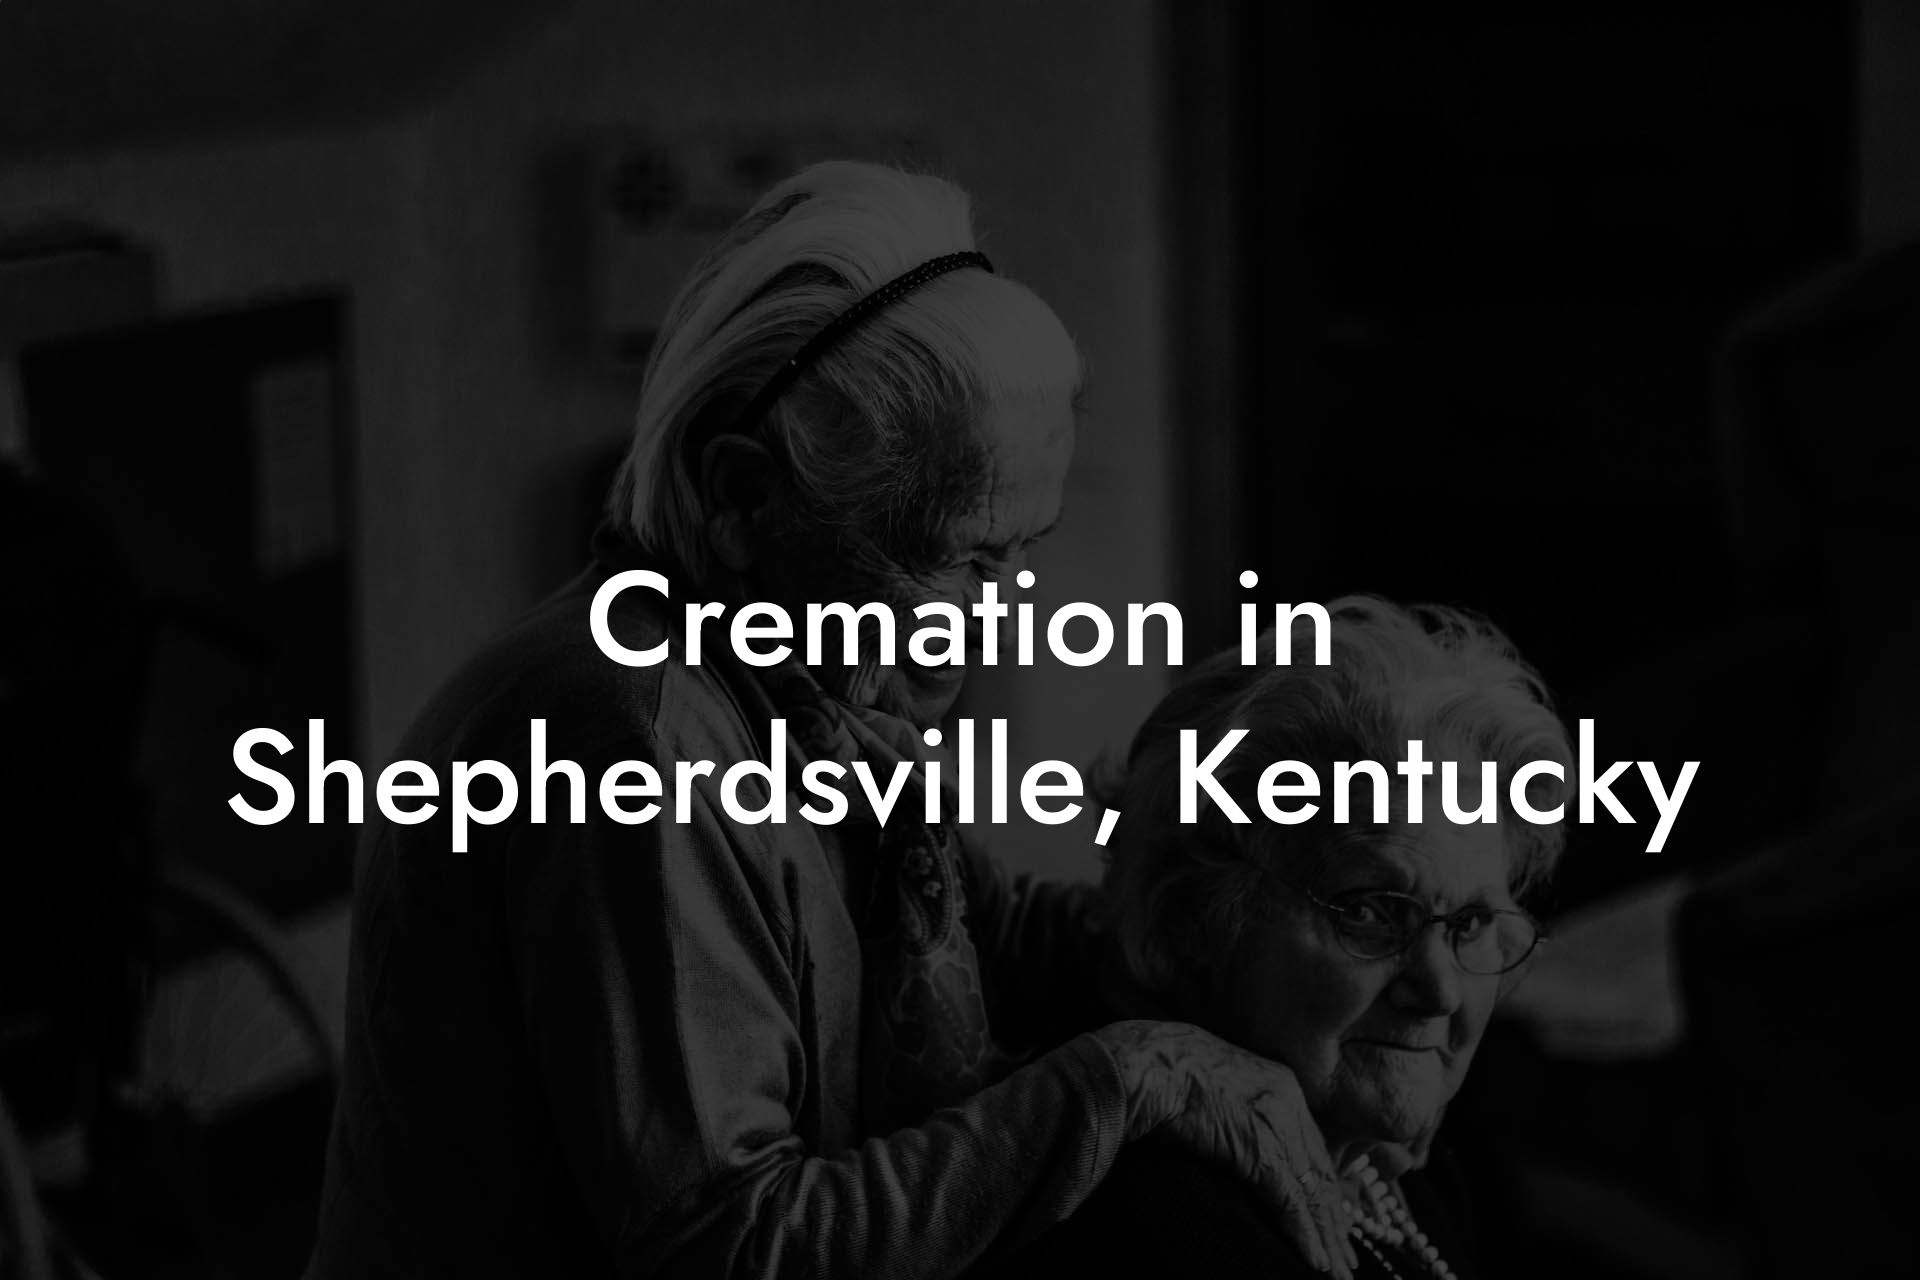 Cremation in Shepherdsville, Kentucky